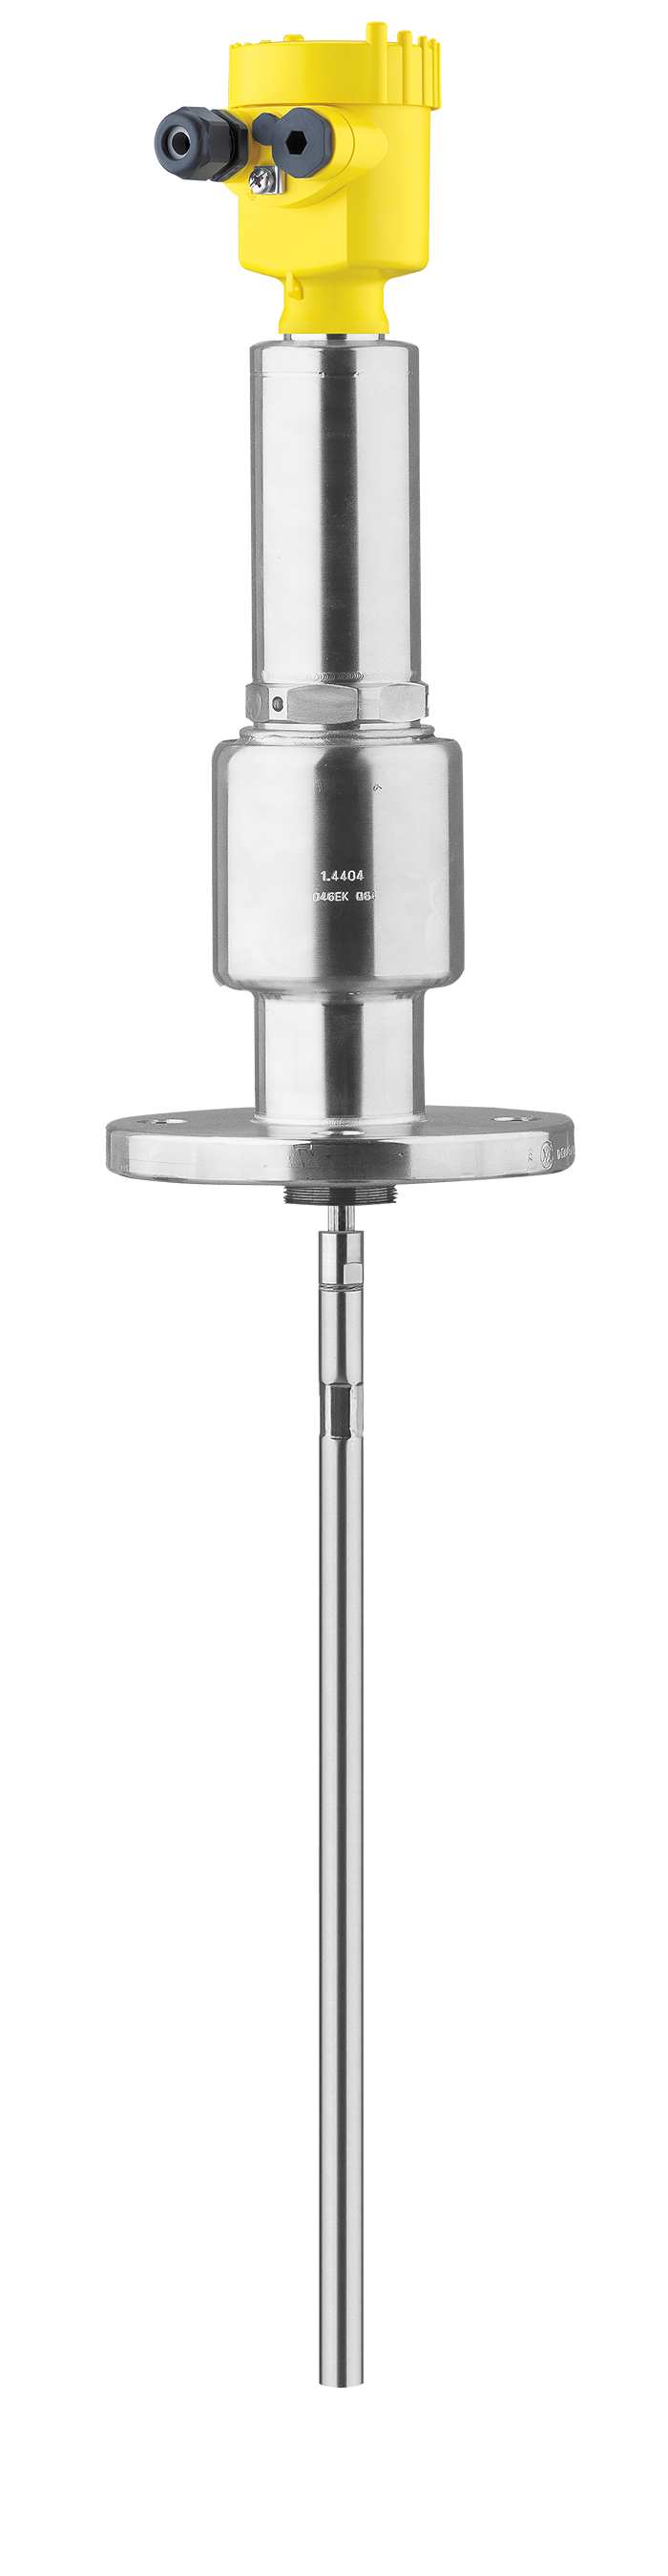 VEGAFLEX 86 导波雷达液位计用于高温高压液位界面测量